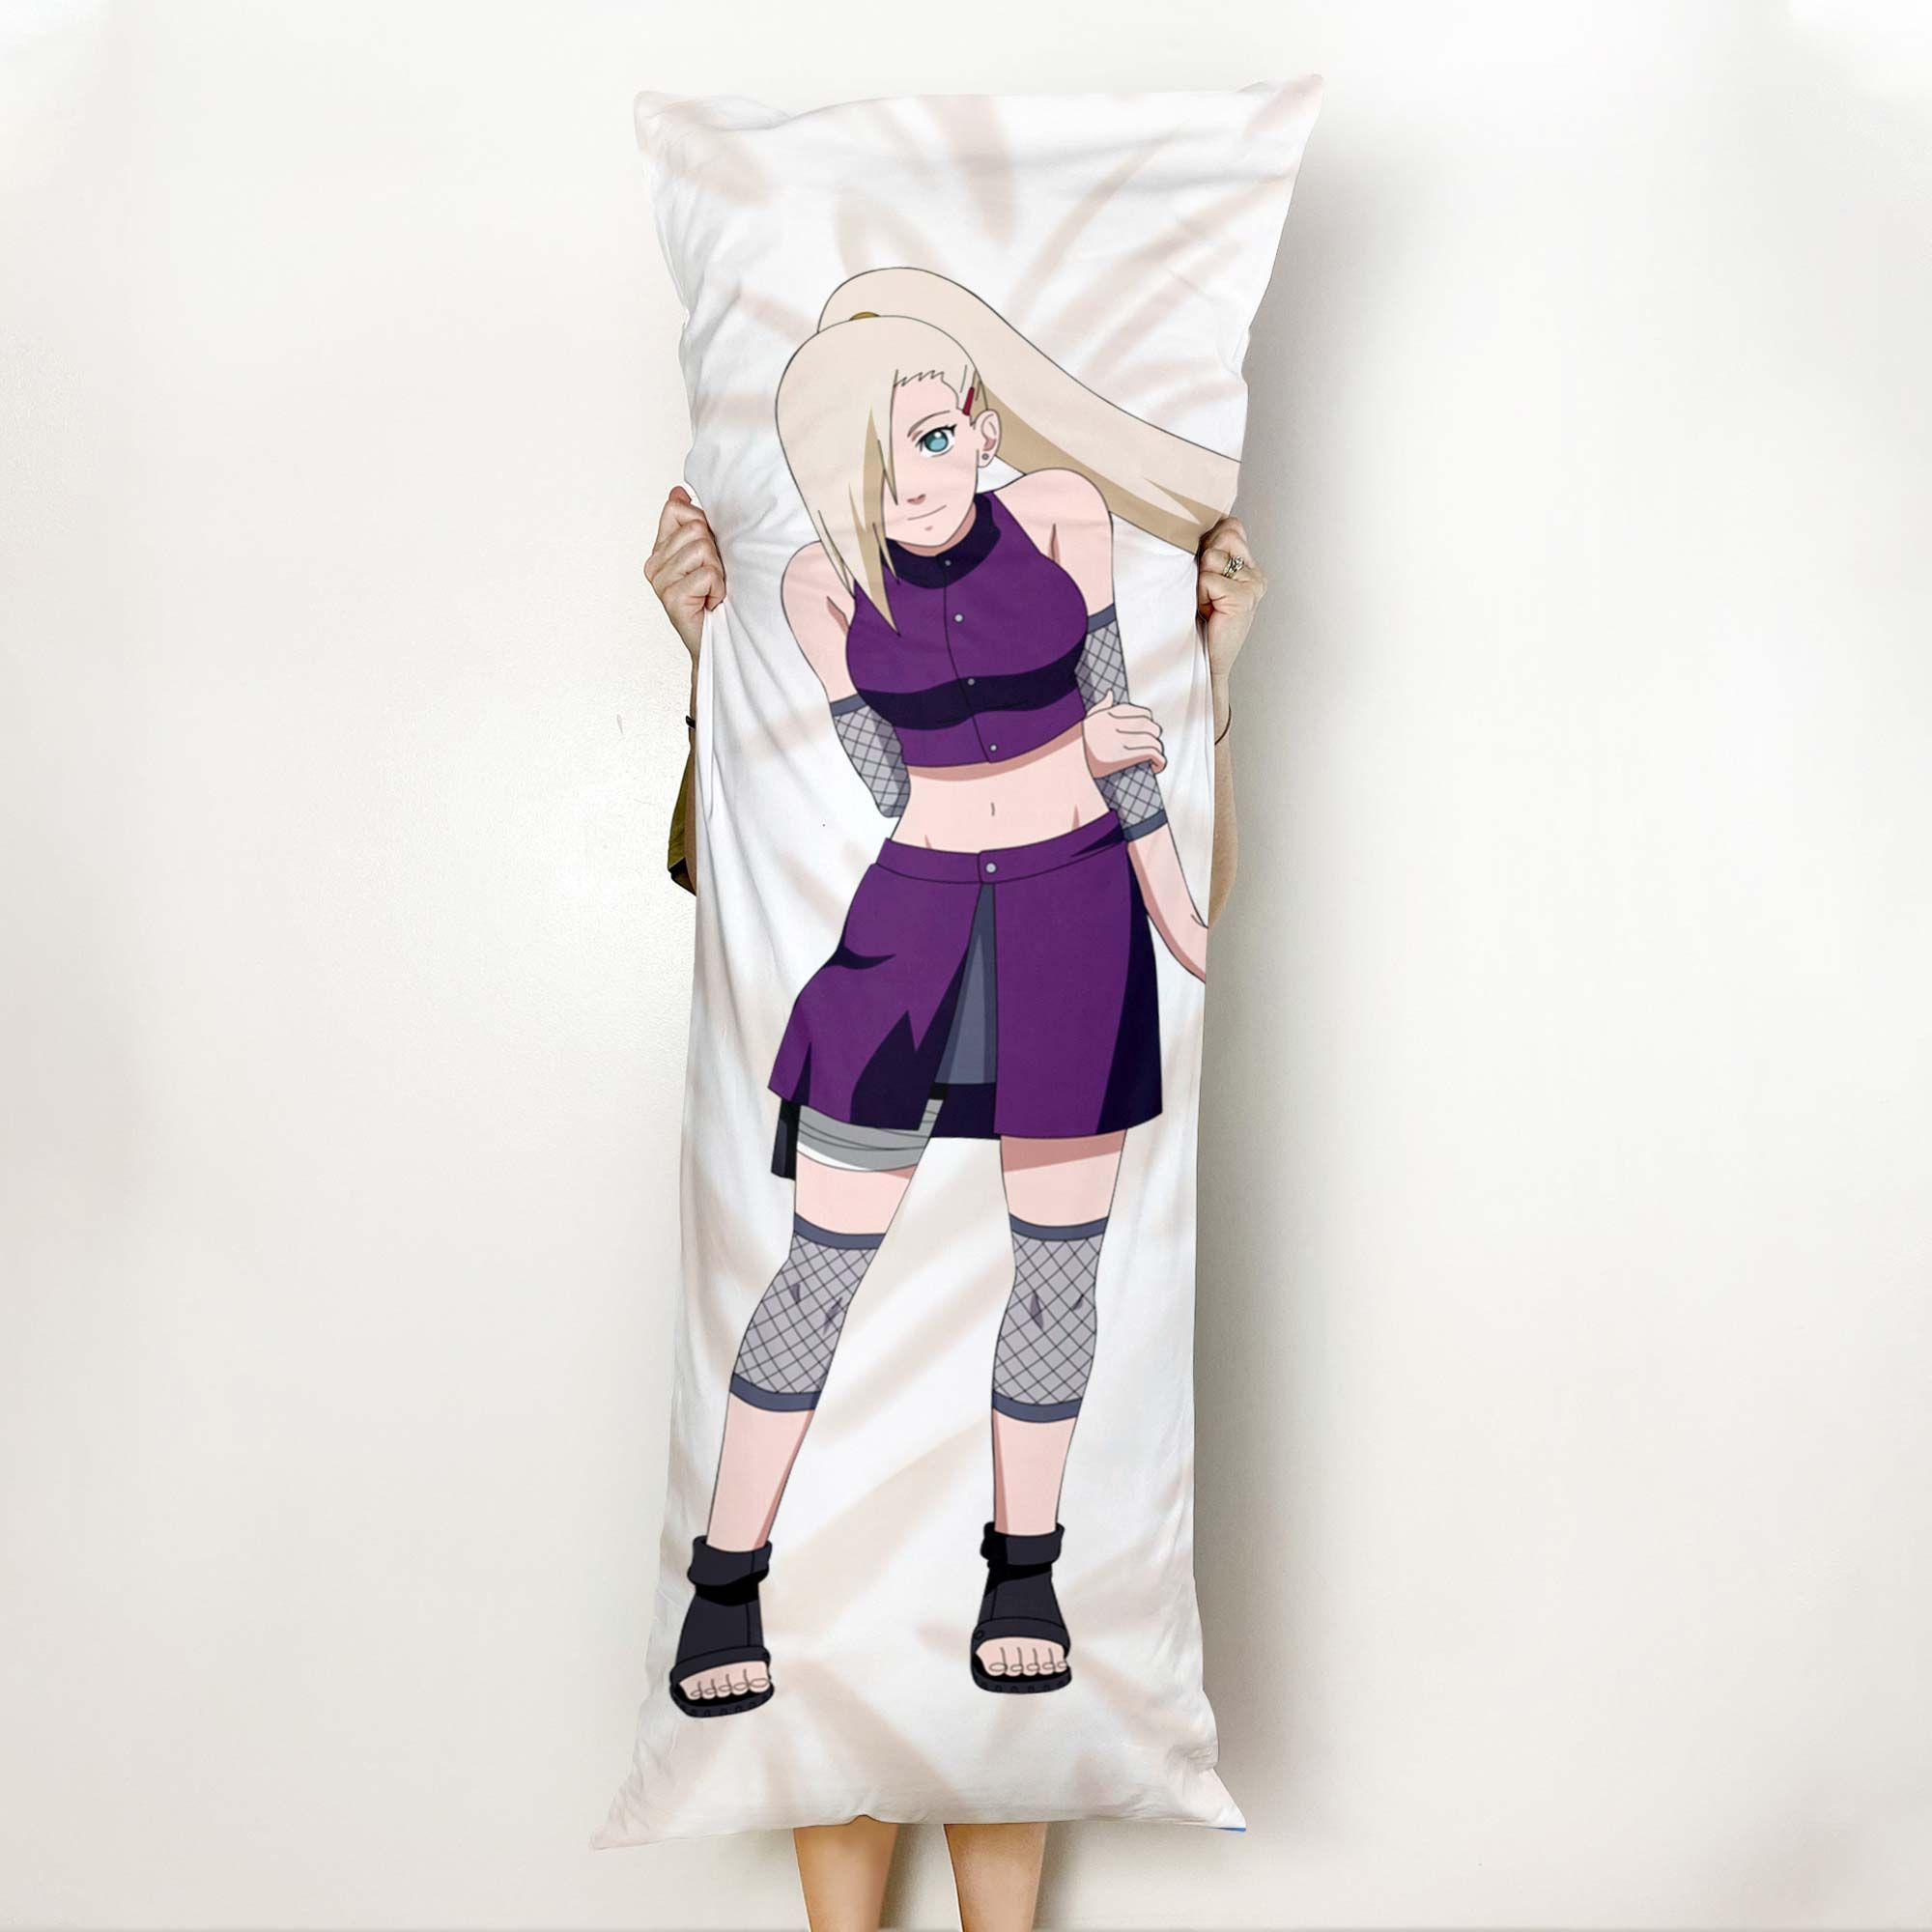 Ino Yamanaka Body Pillow Dakimakura Cover Anime For Fans Girl OT2102